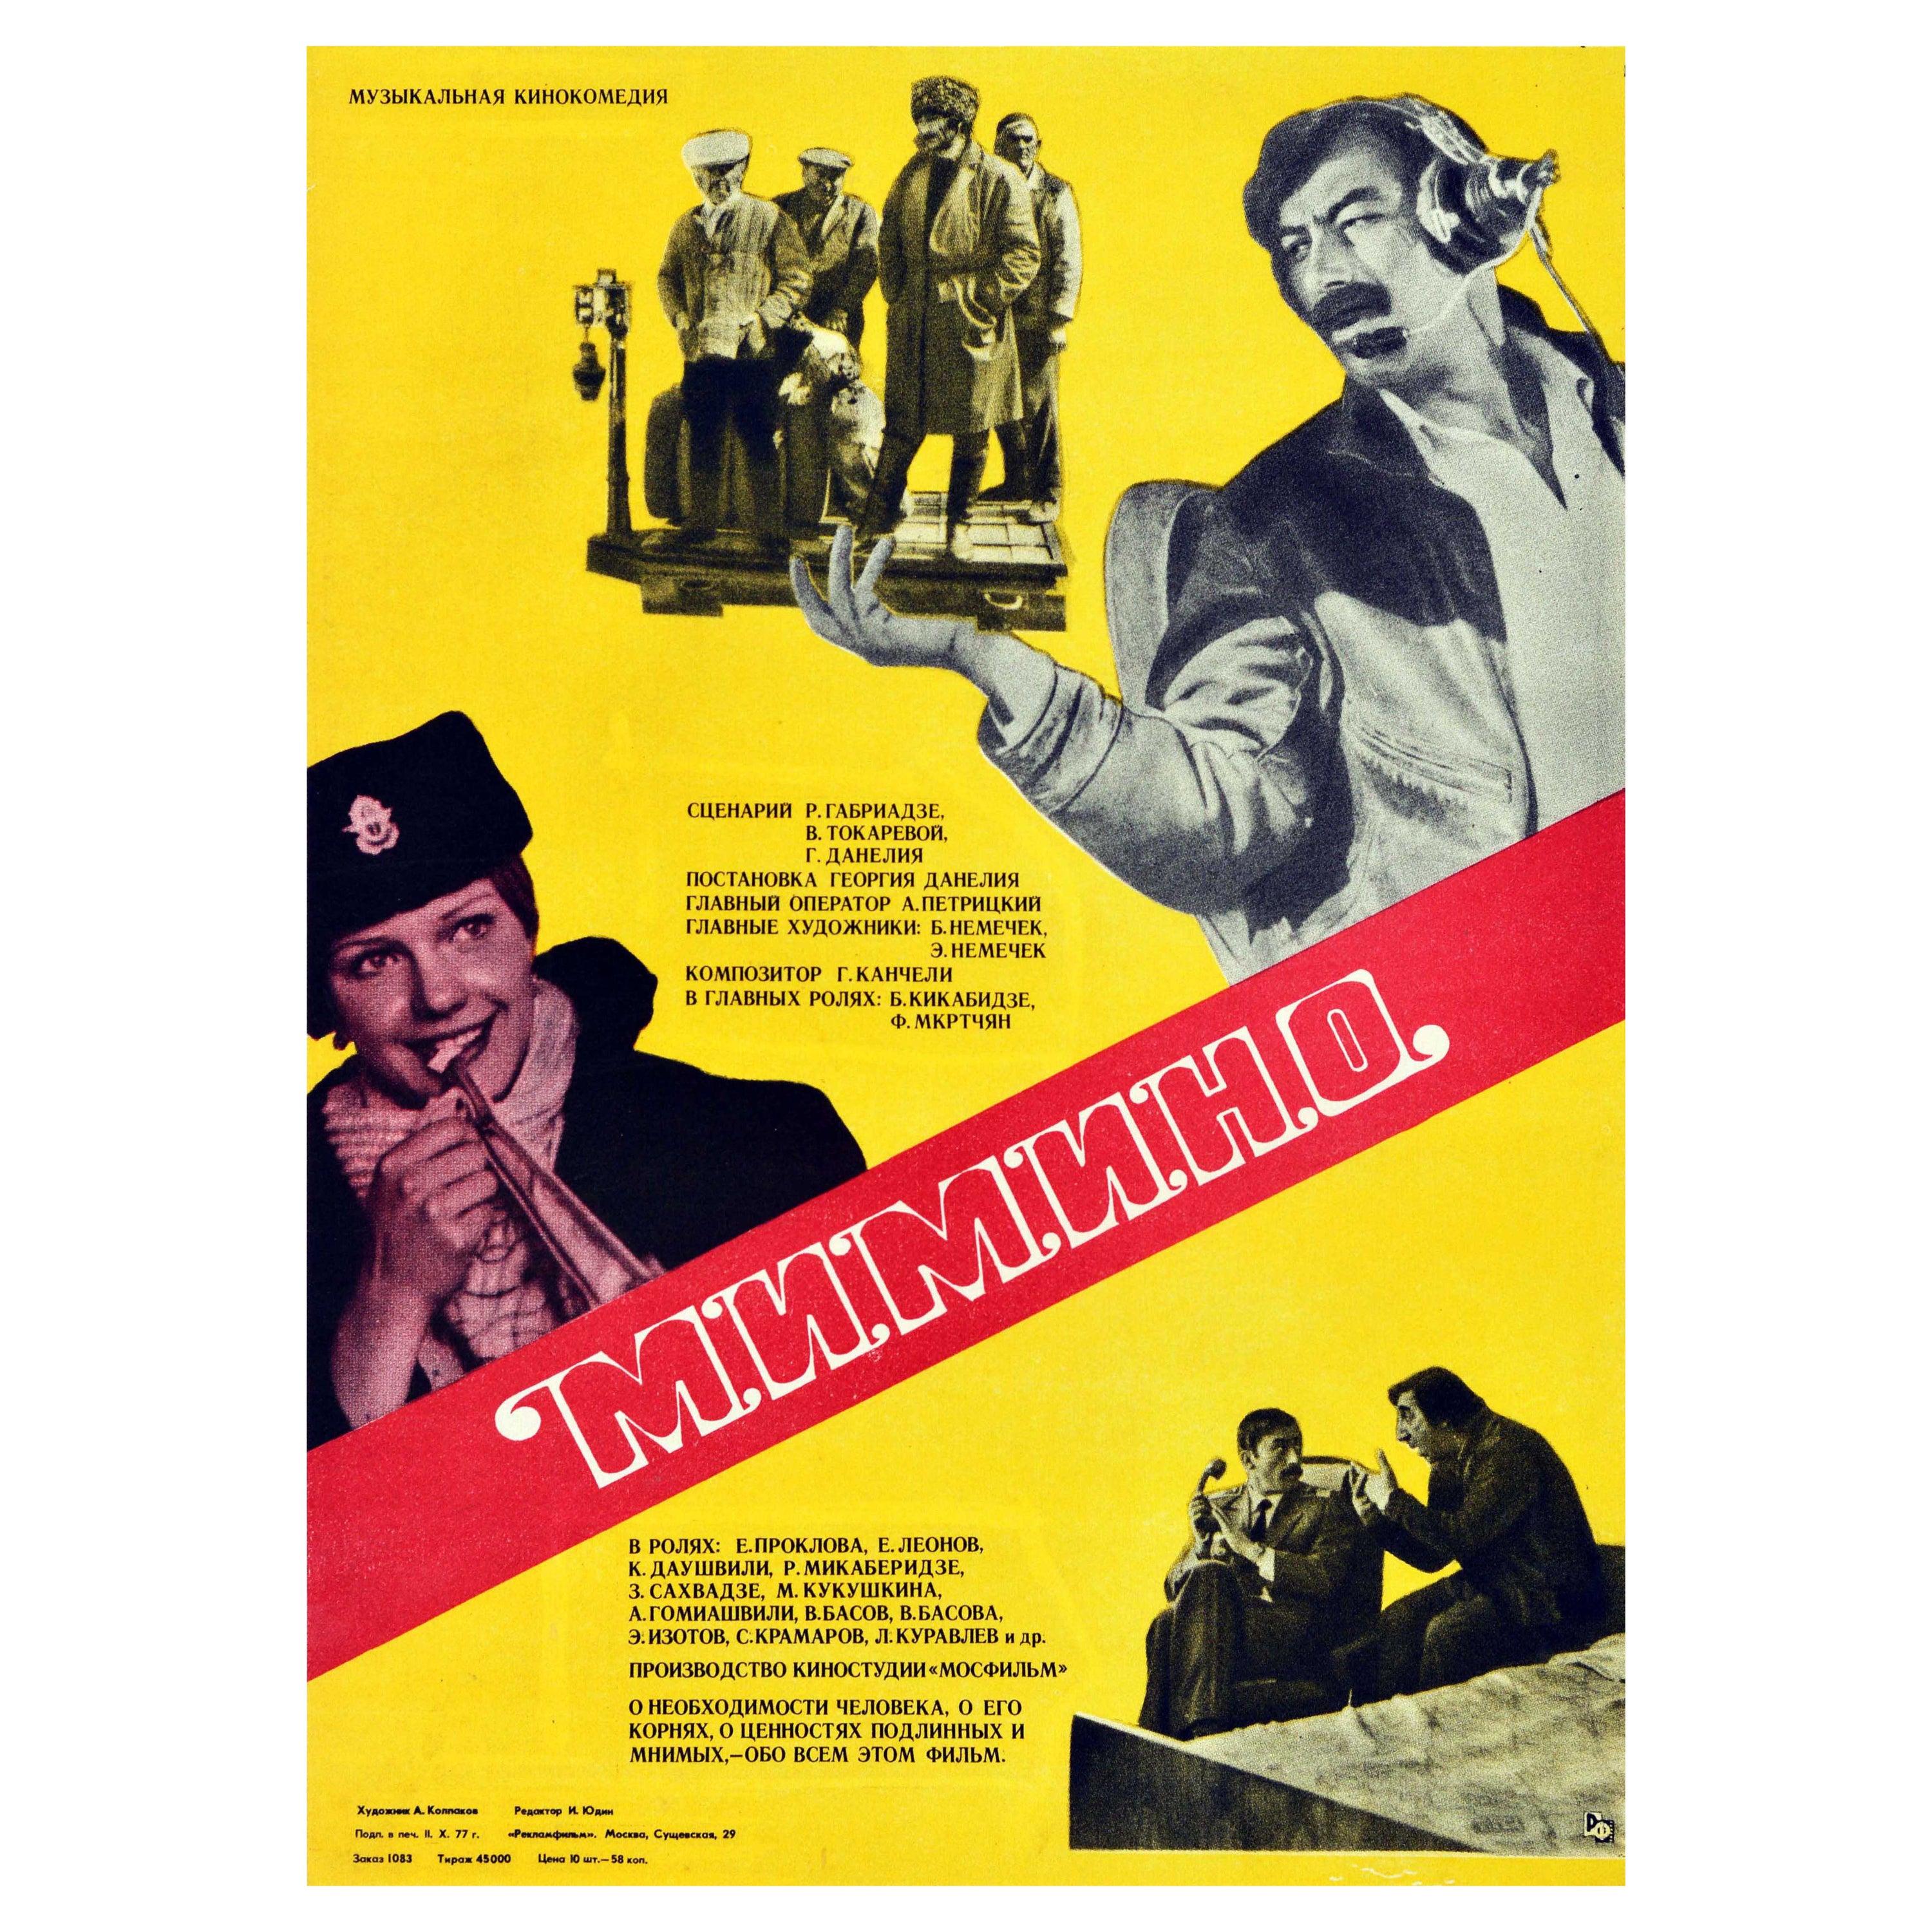 Original Vintage Film Poster For Mimino USSR Comedy Movie Photomontage Design For Sale